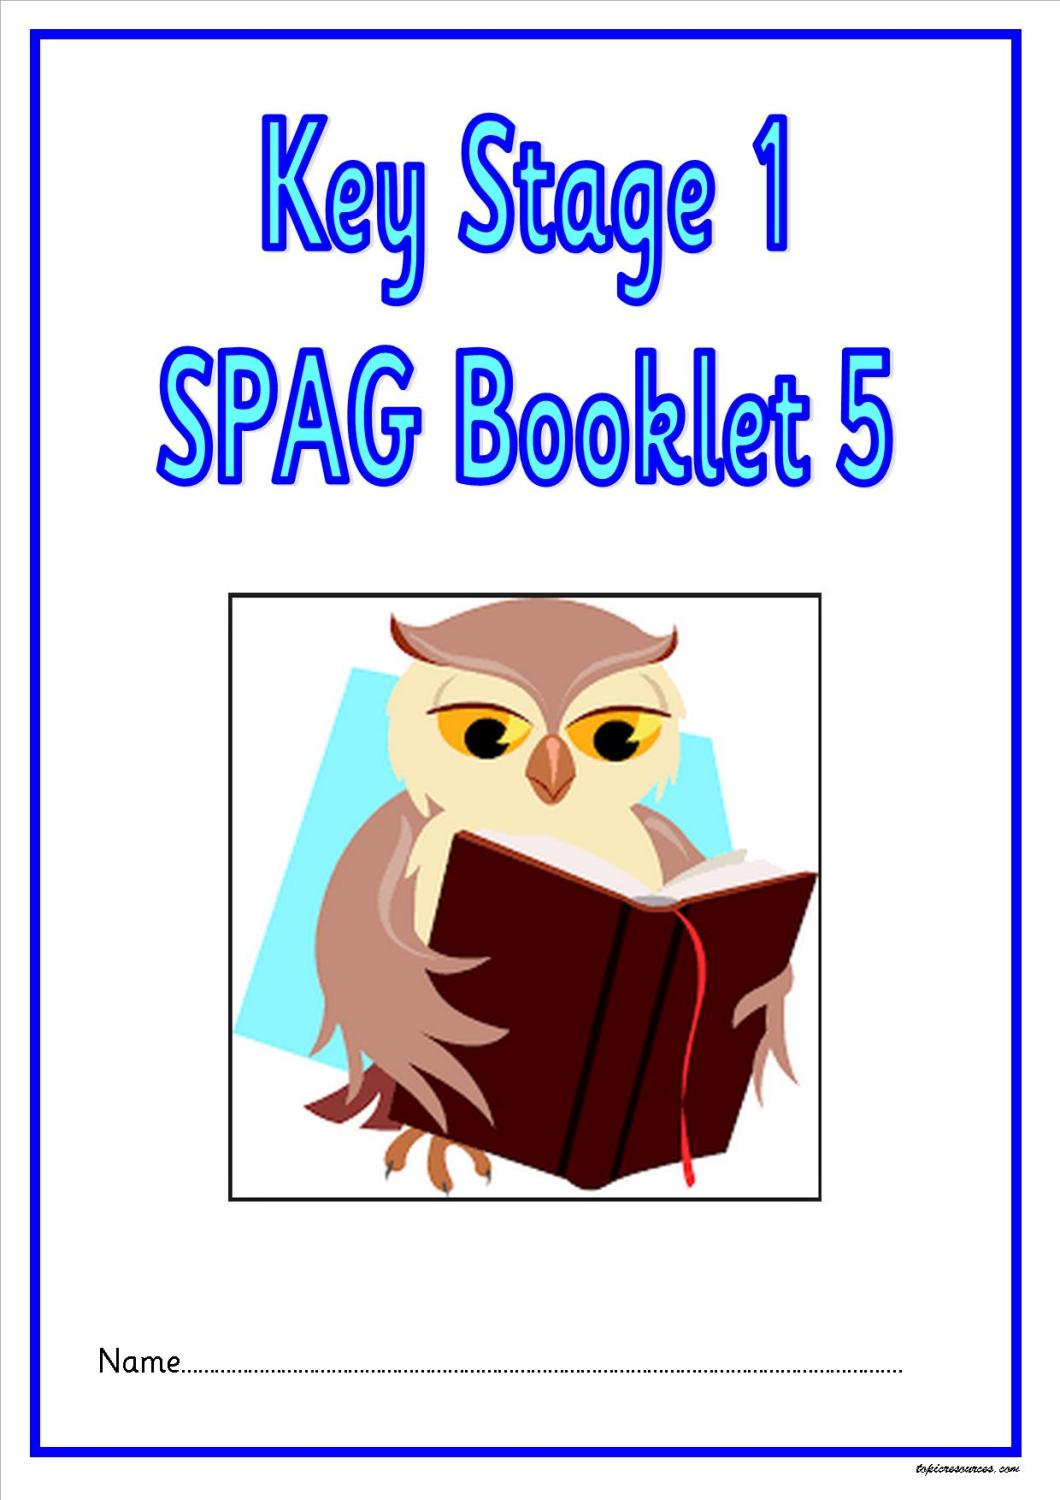 SPAG activity booklet5 for KS1 children